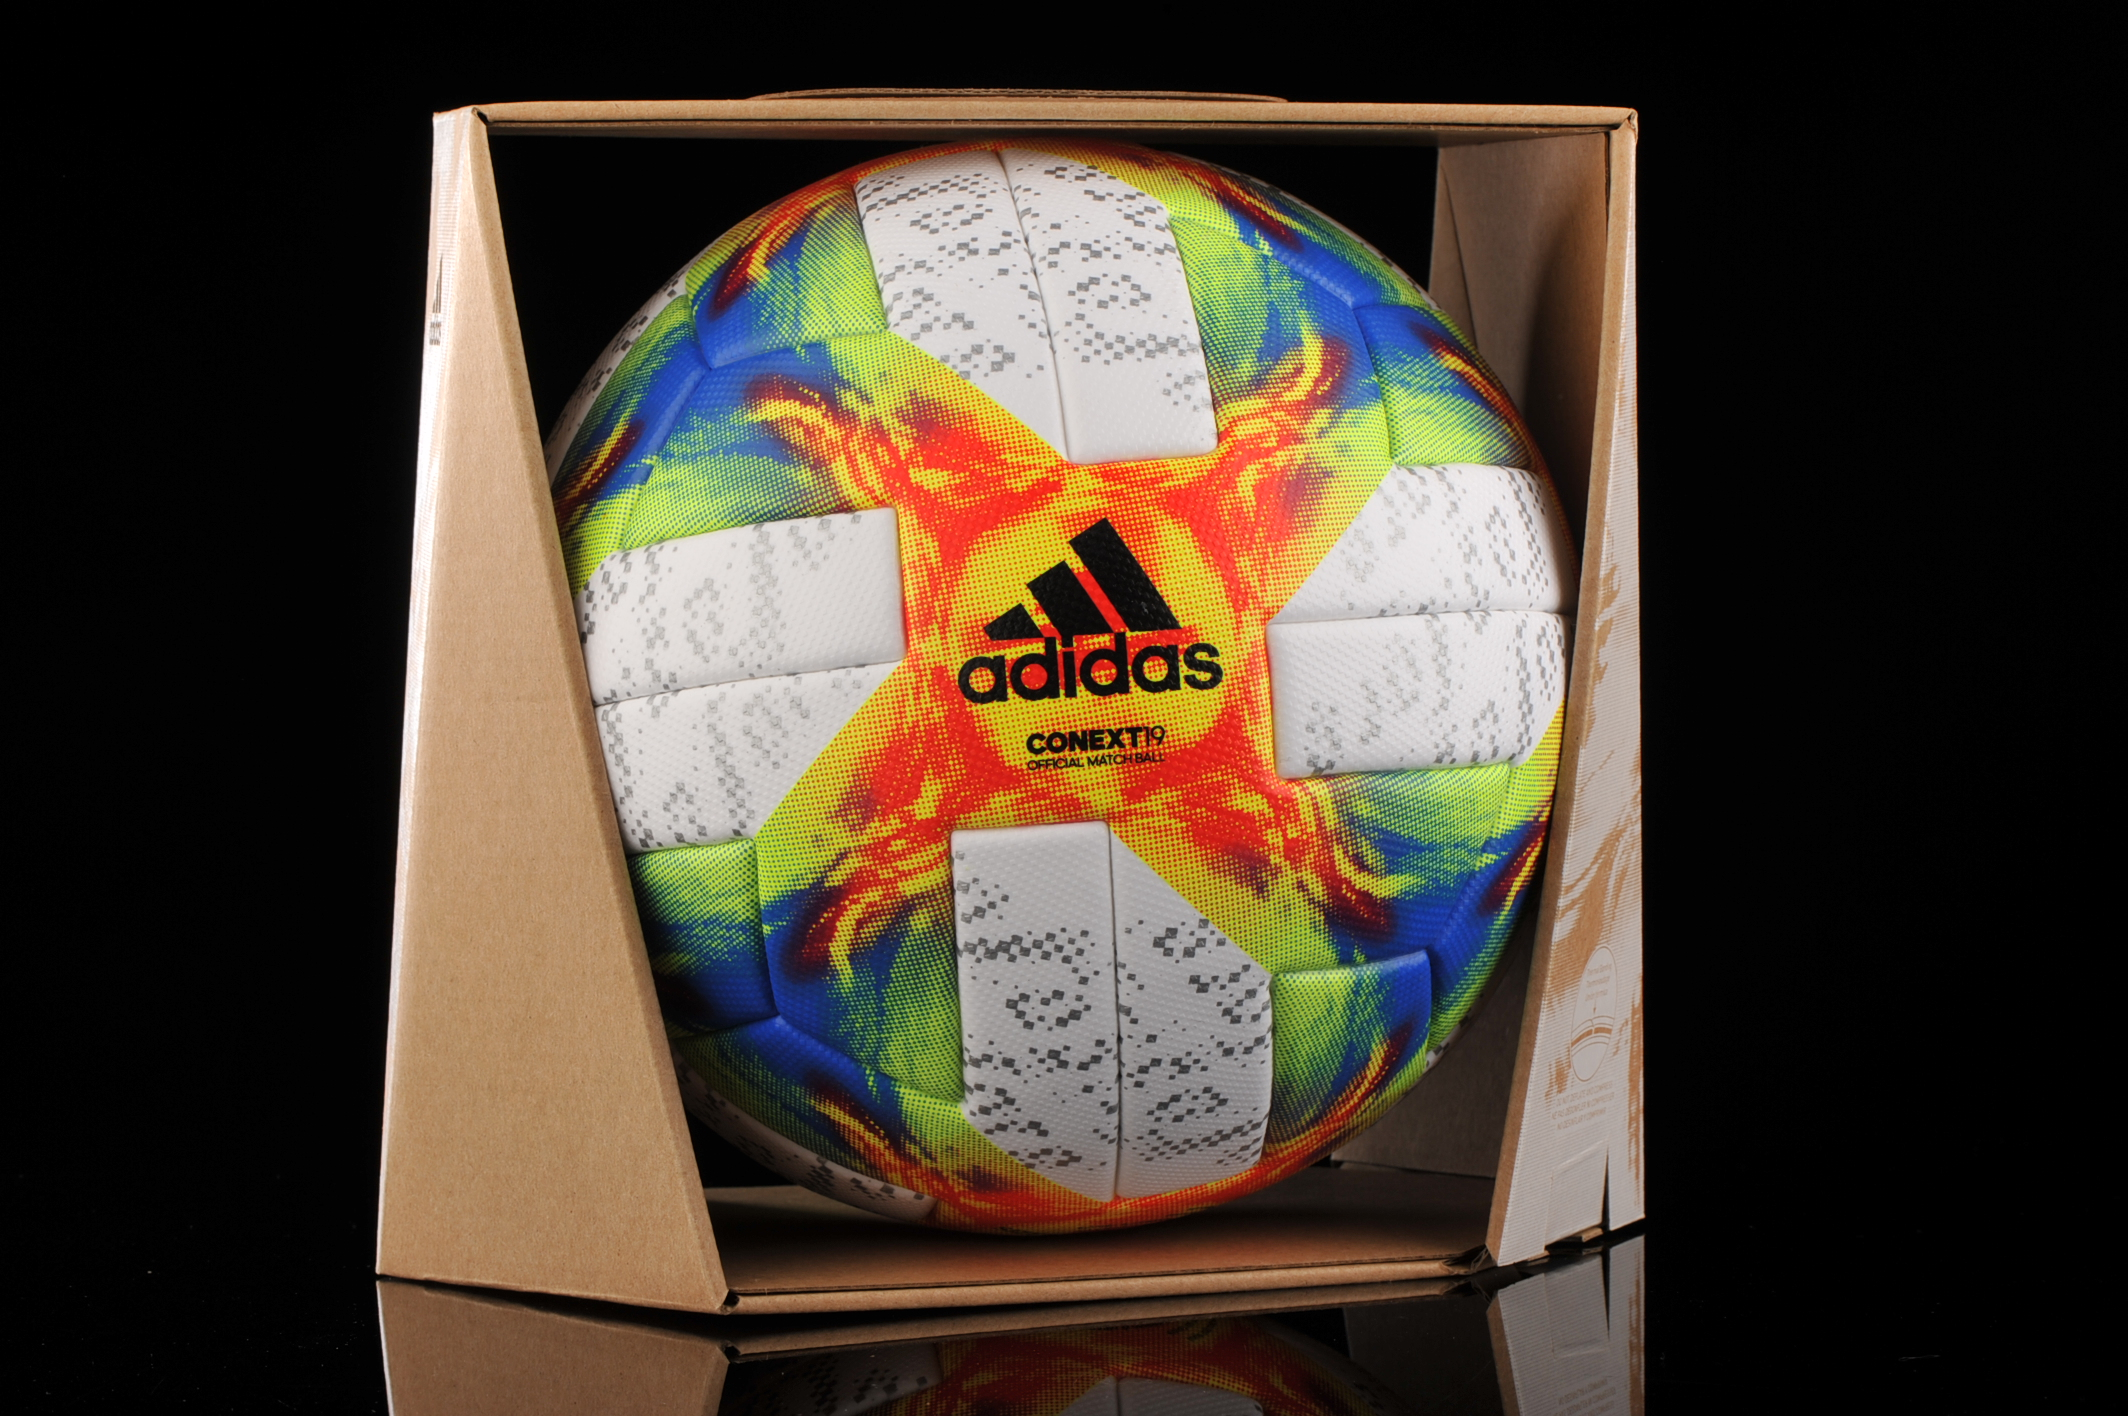 Ball adidas Conext 19 OMB size 5 | R-GOL.com - Football boots \u0026 equipment